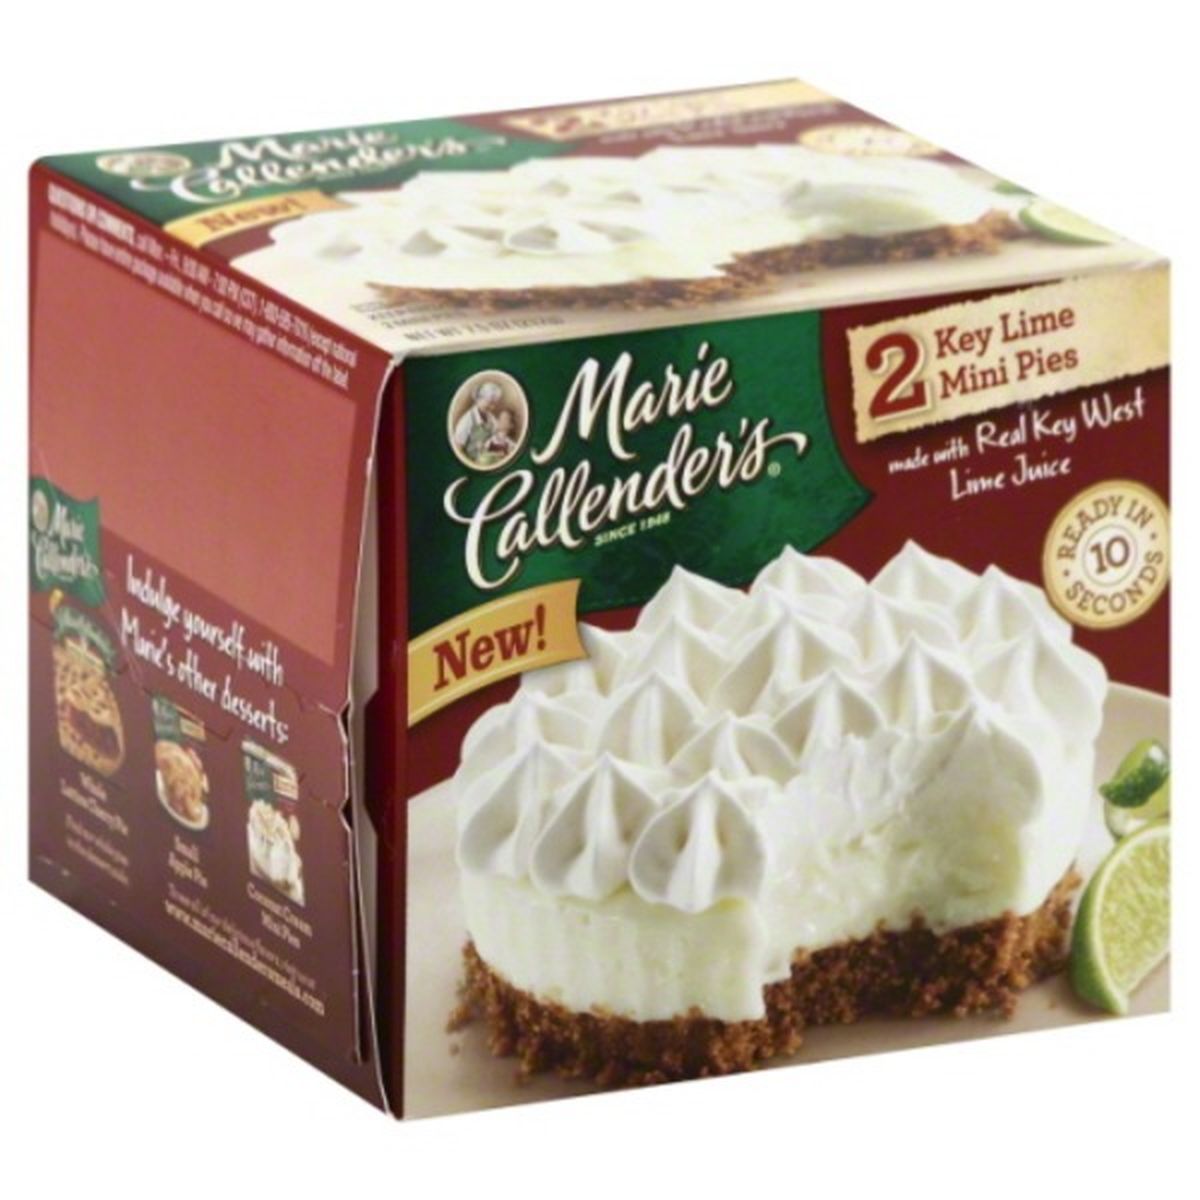 Calories in Marie Callender's Mini Pies, Key Lime